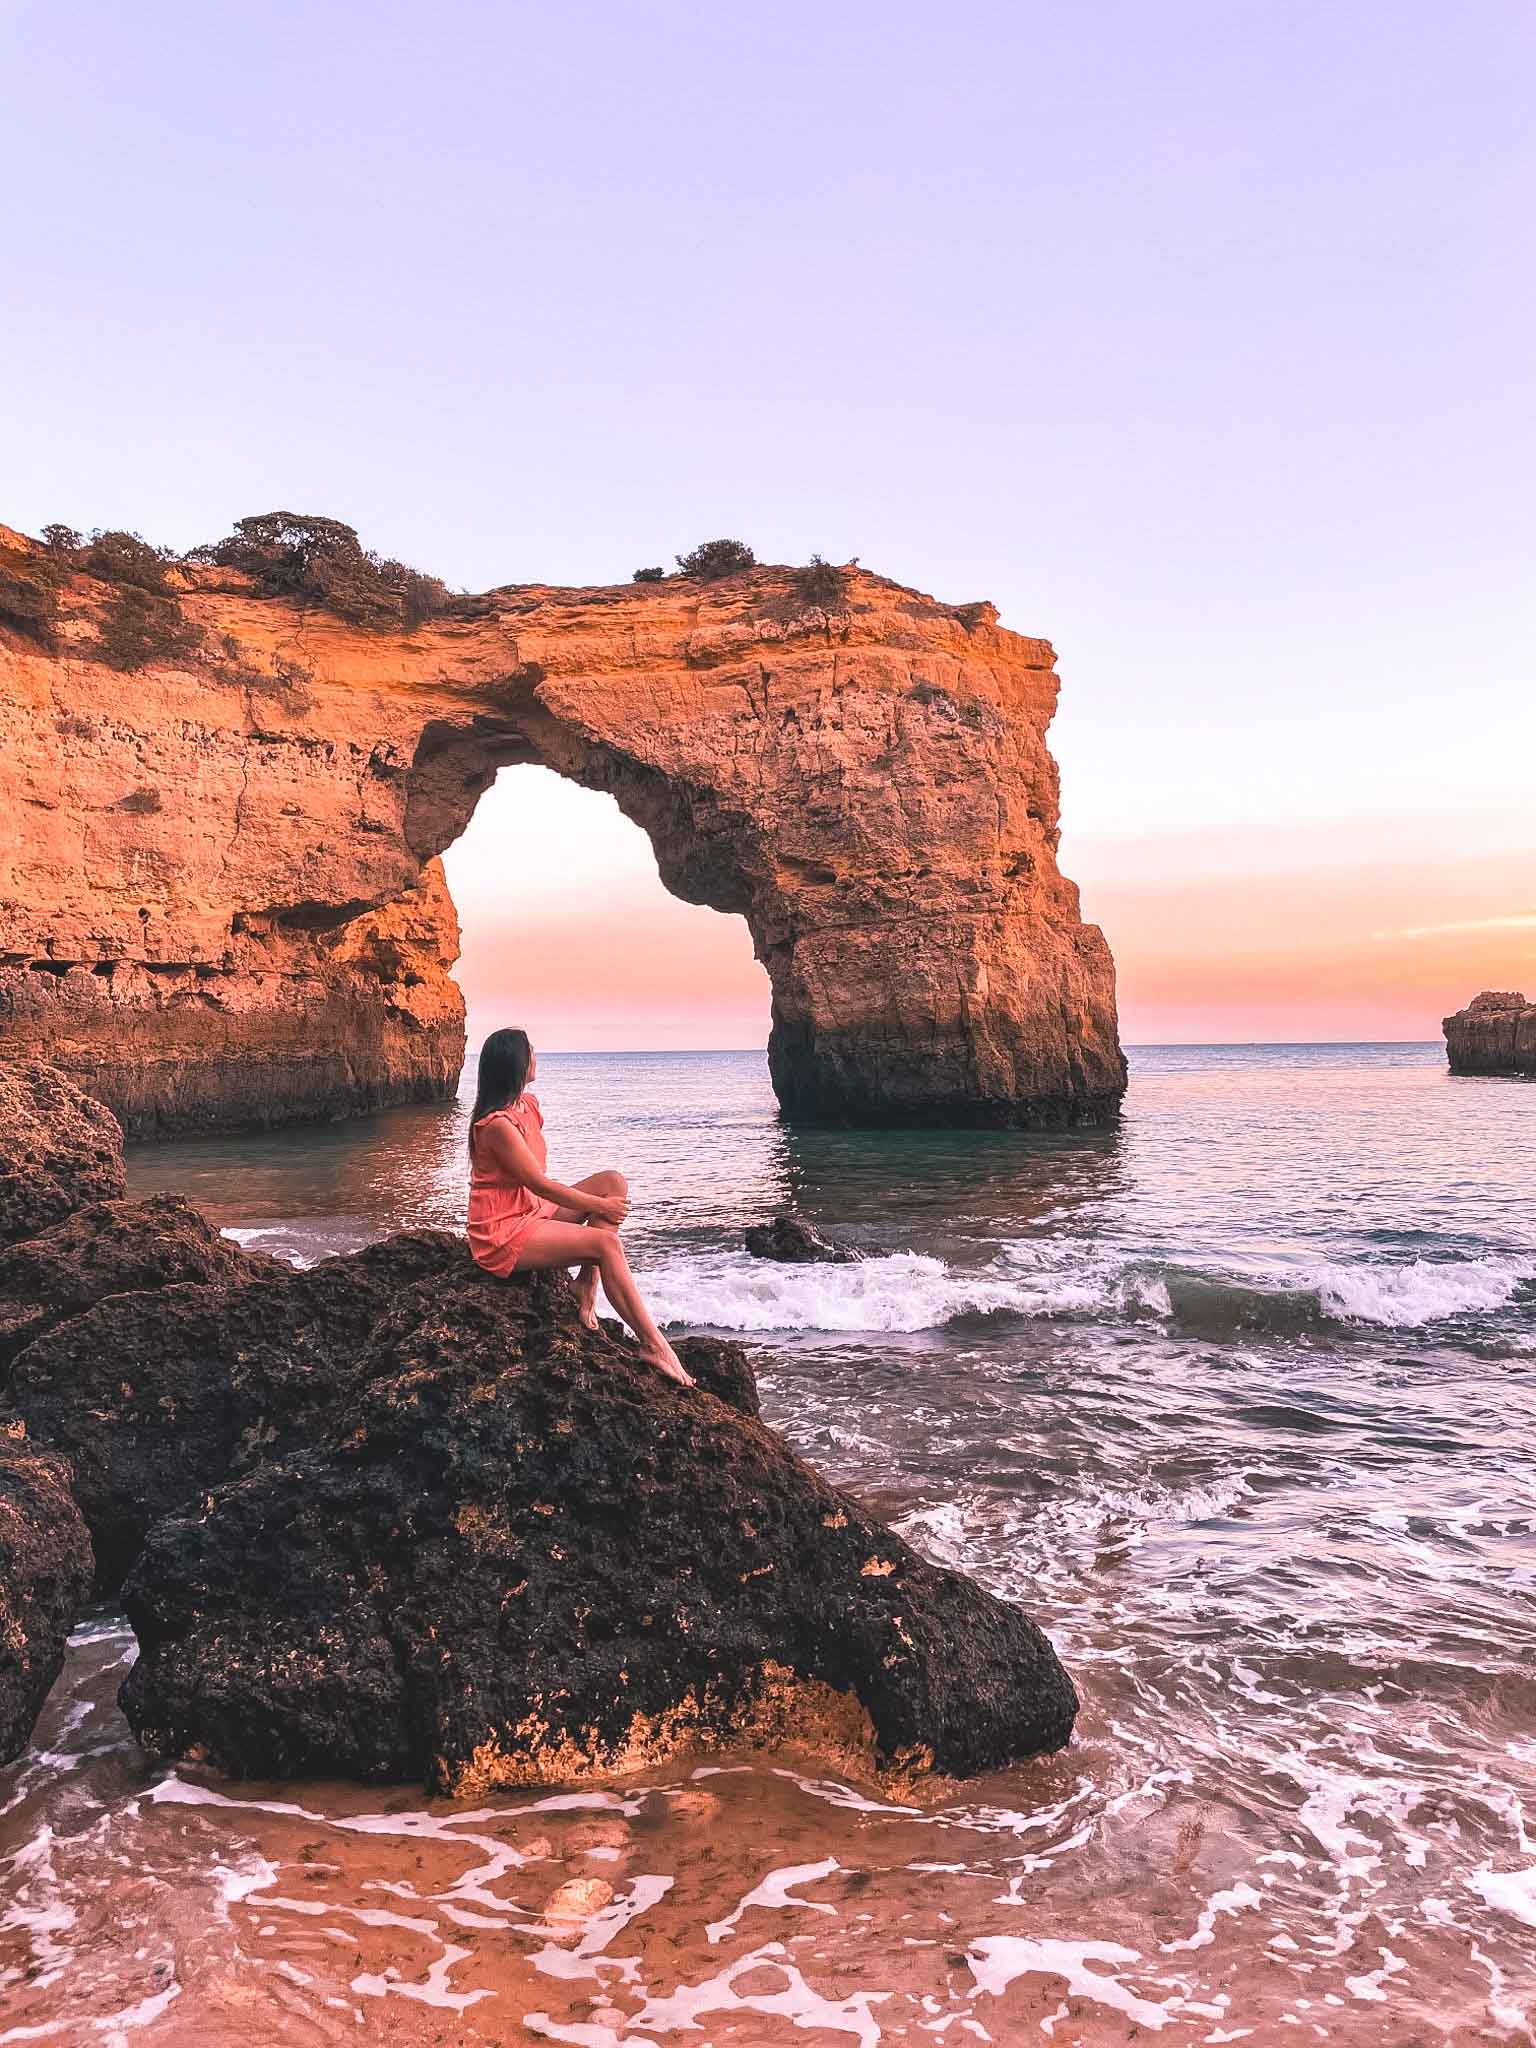 Caves and algars in Algarve Portugal - Albandeira beach arch